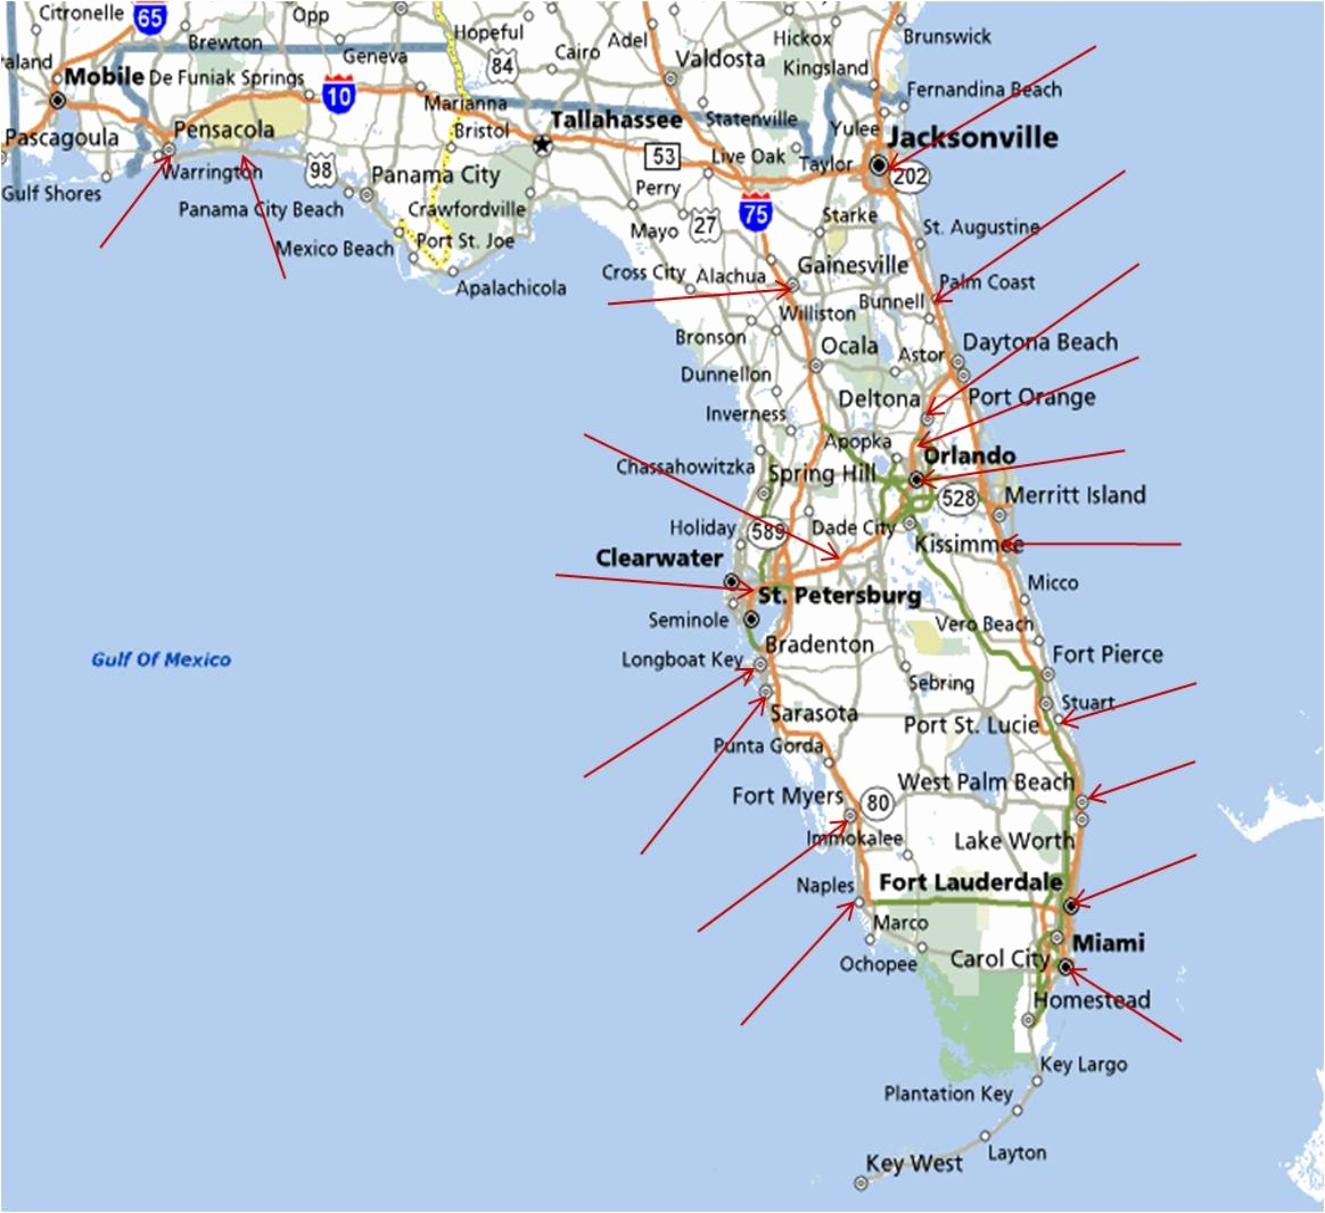 Best East Coast Florida Beaches New Map Florida West Coast Florida - West Florida Beaches Map